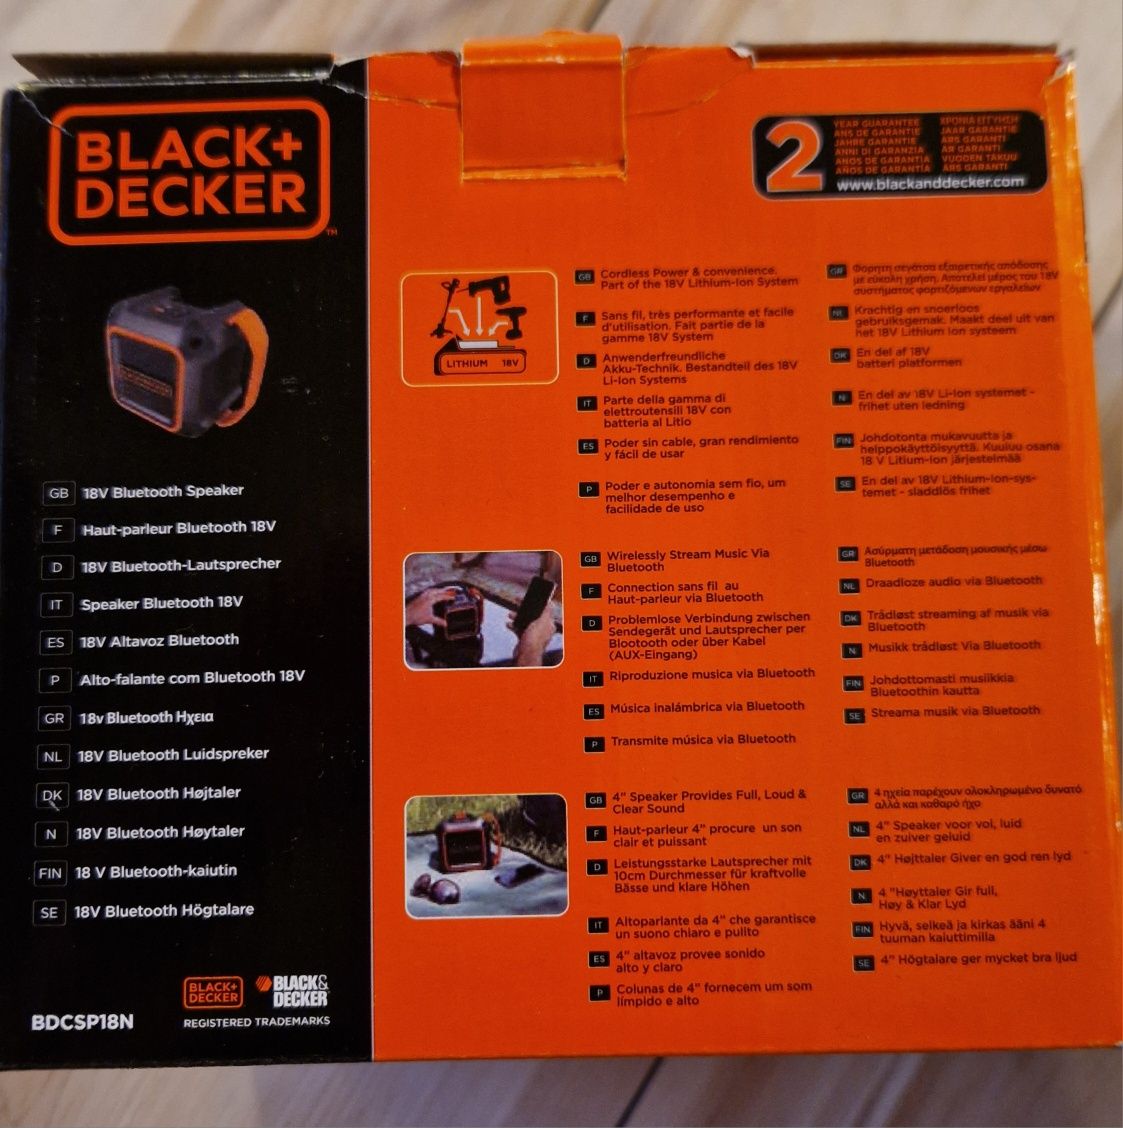 Zestaw Black+Decker głośnik bluetooth 18V + akumulator + ładowarka